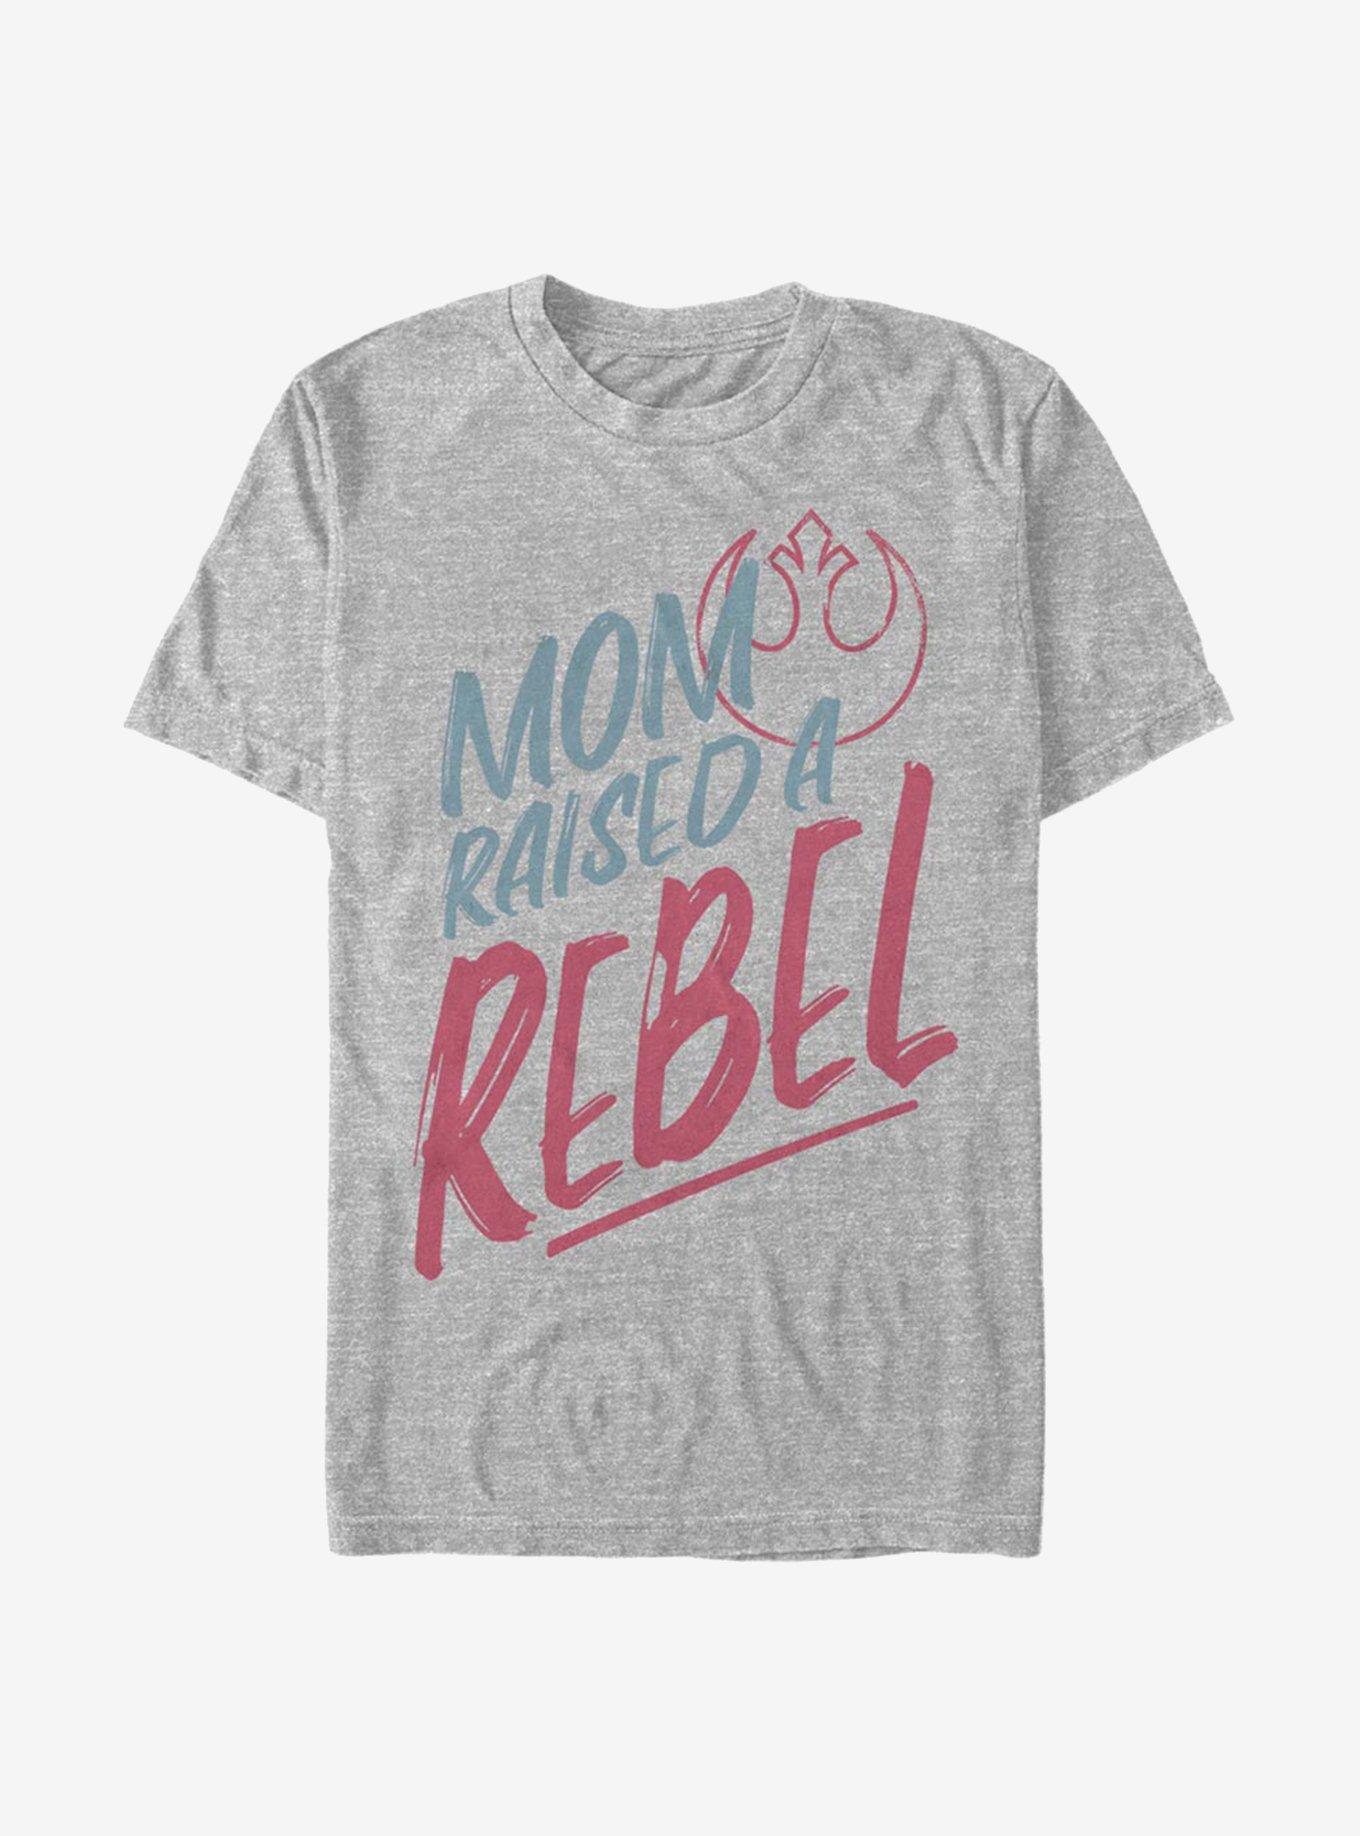 Star Wars Rebel Kid T-Shirt, ATH HTR, hi-res